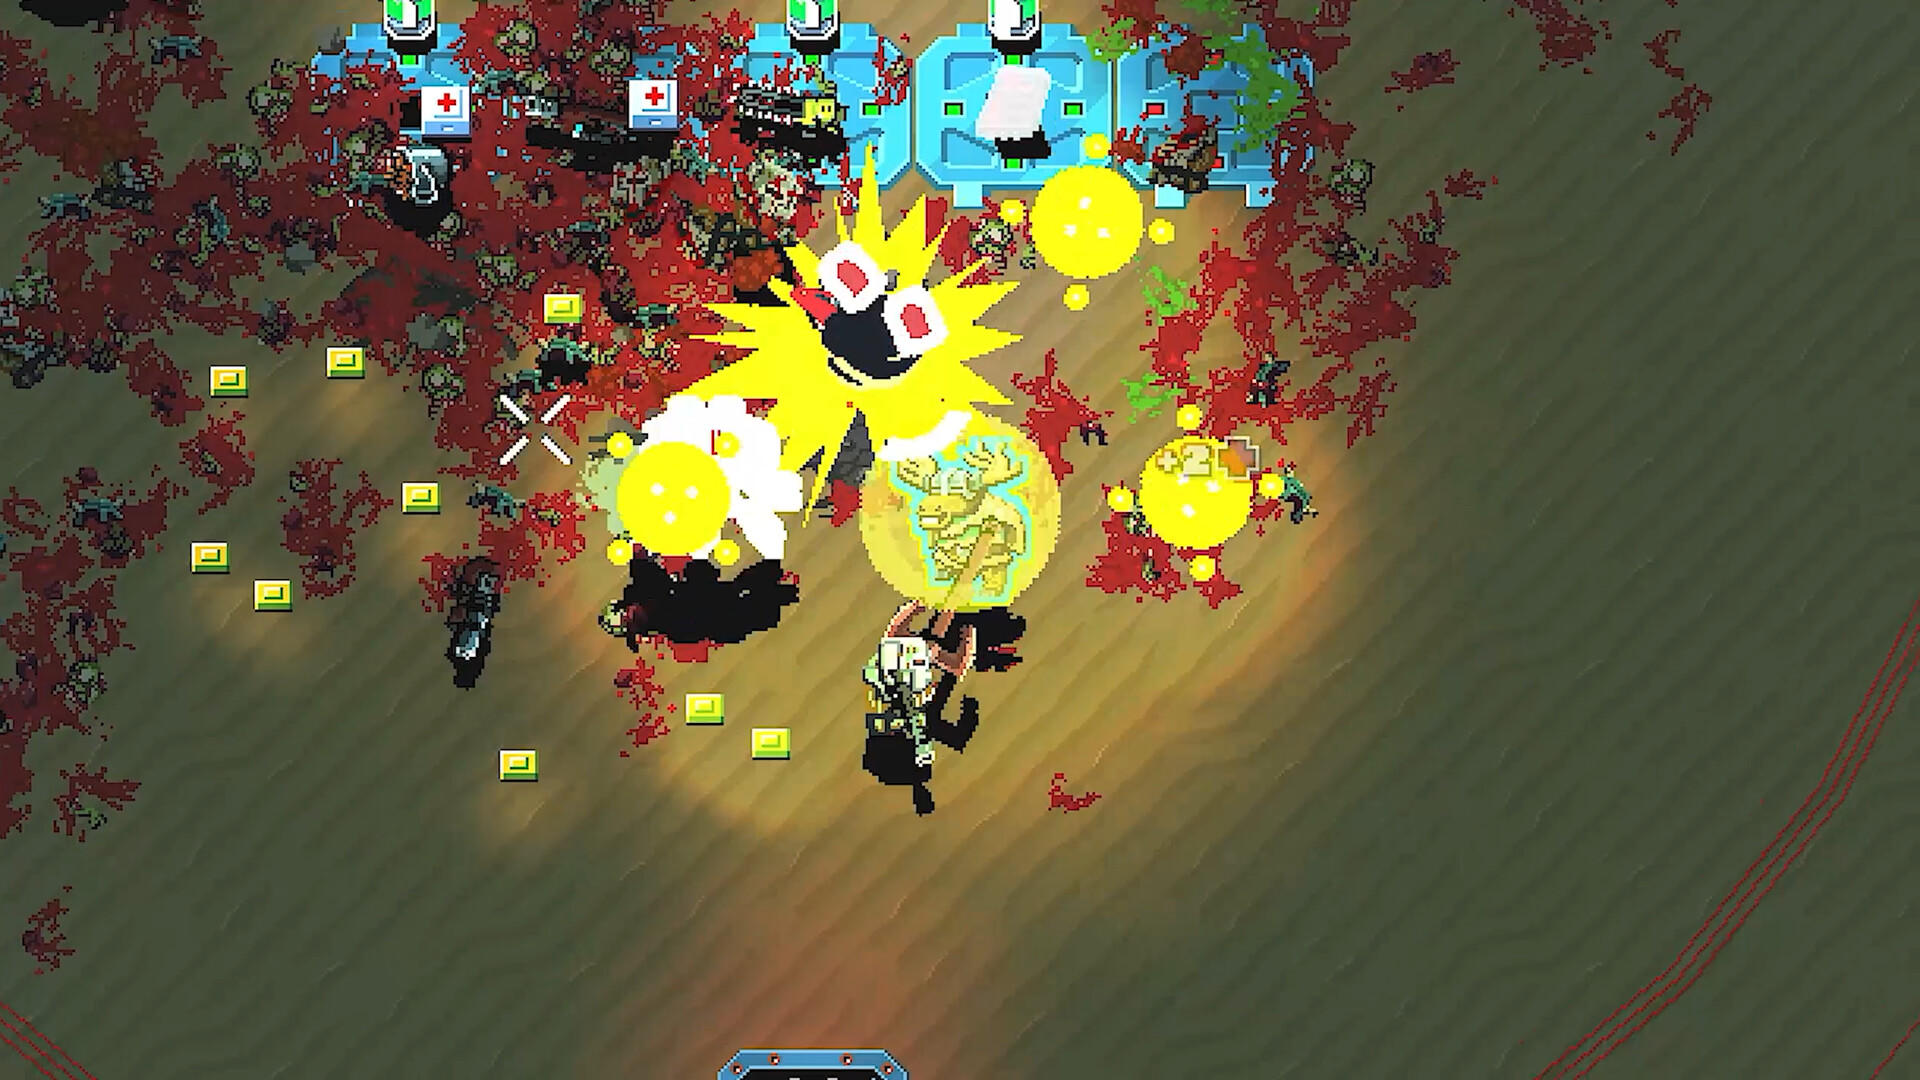 Odinfall screenshot game